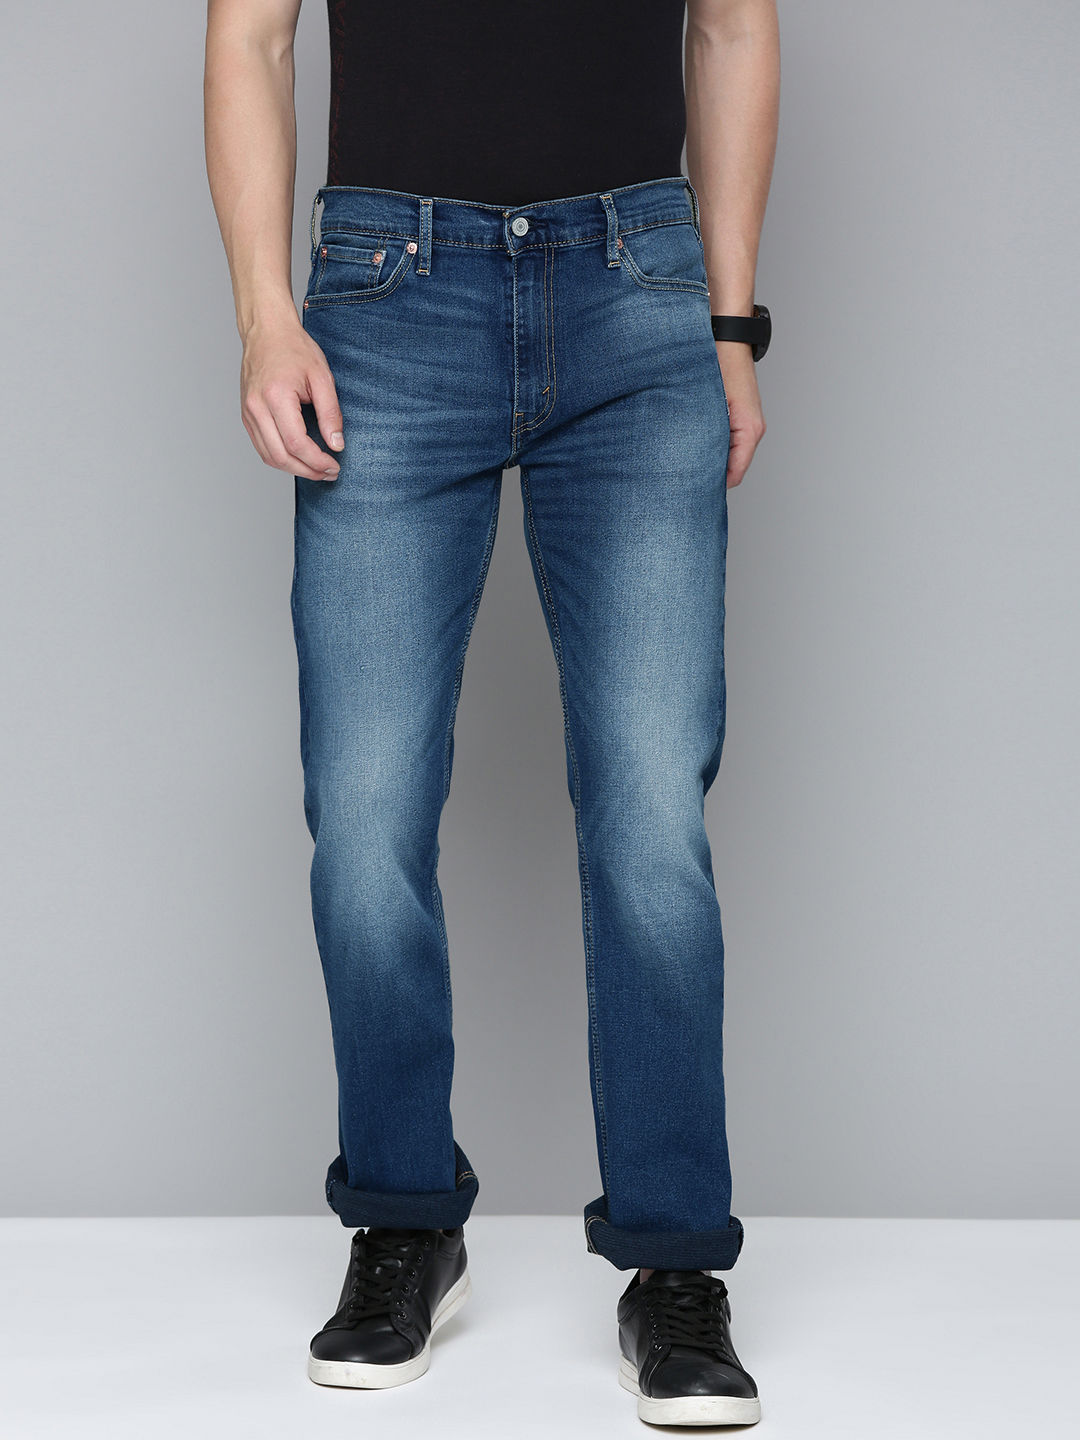 Flipkart - Levis Men 513 Slim Fit Heavy Fade Stretchable Jeans Price